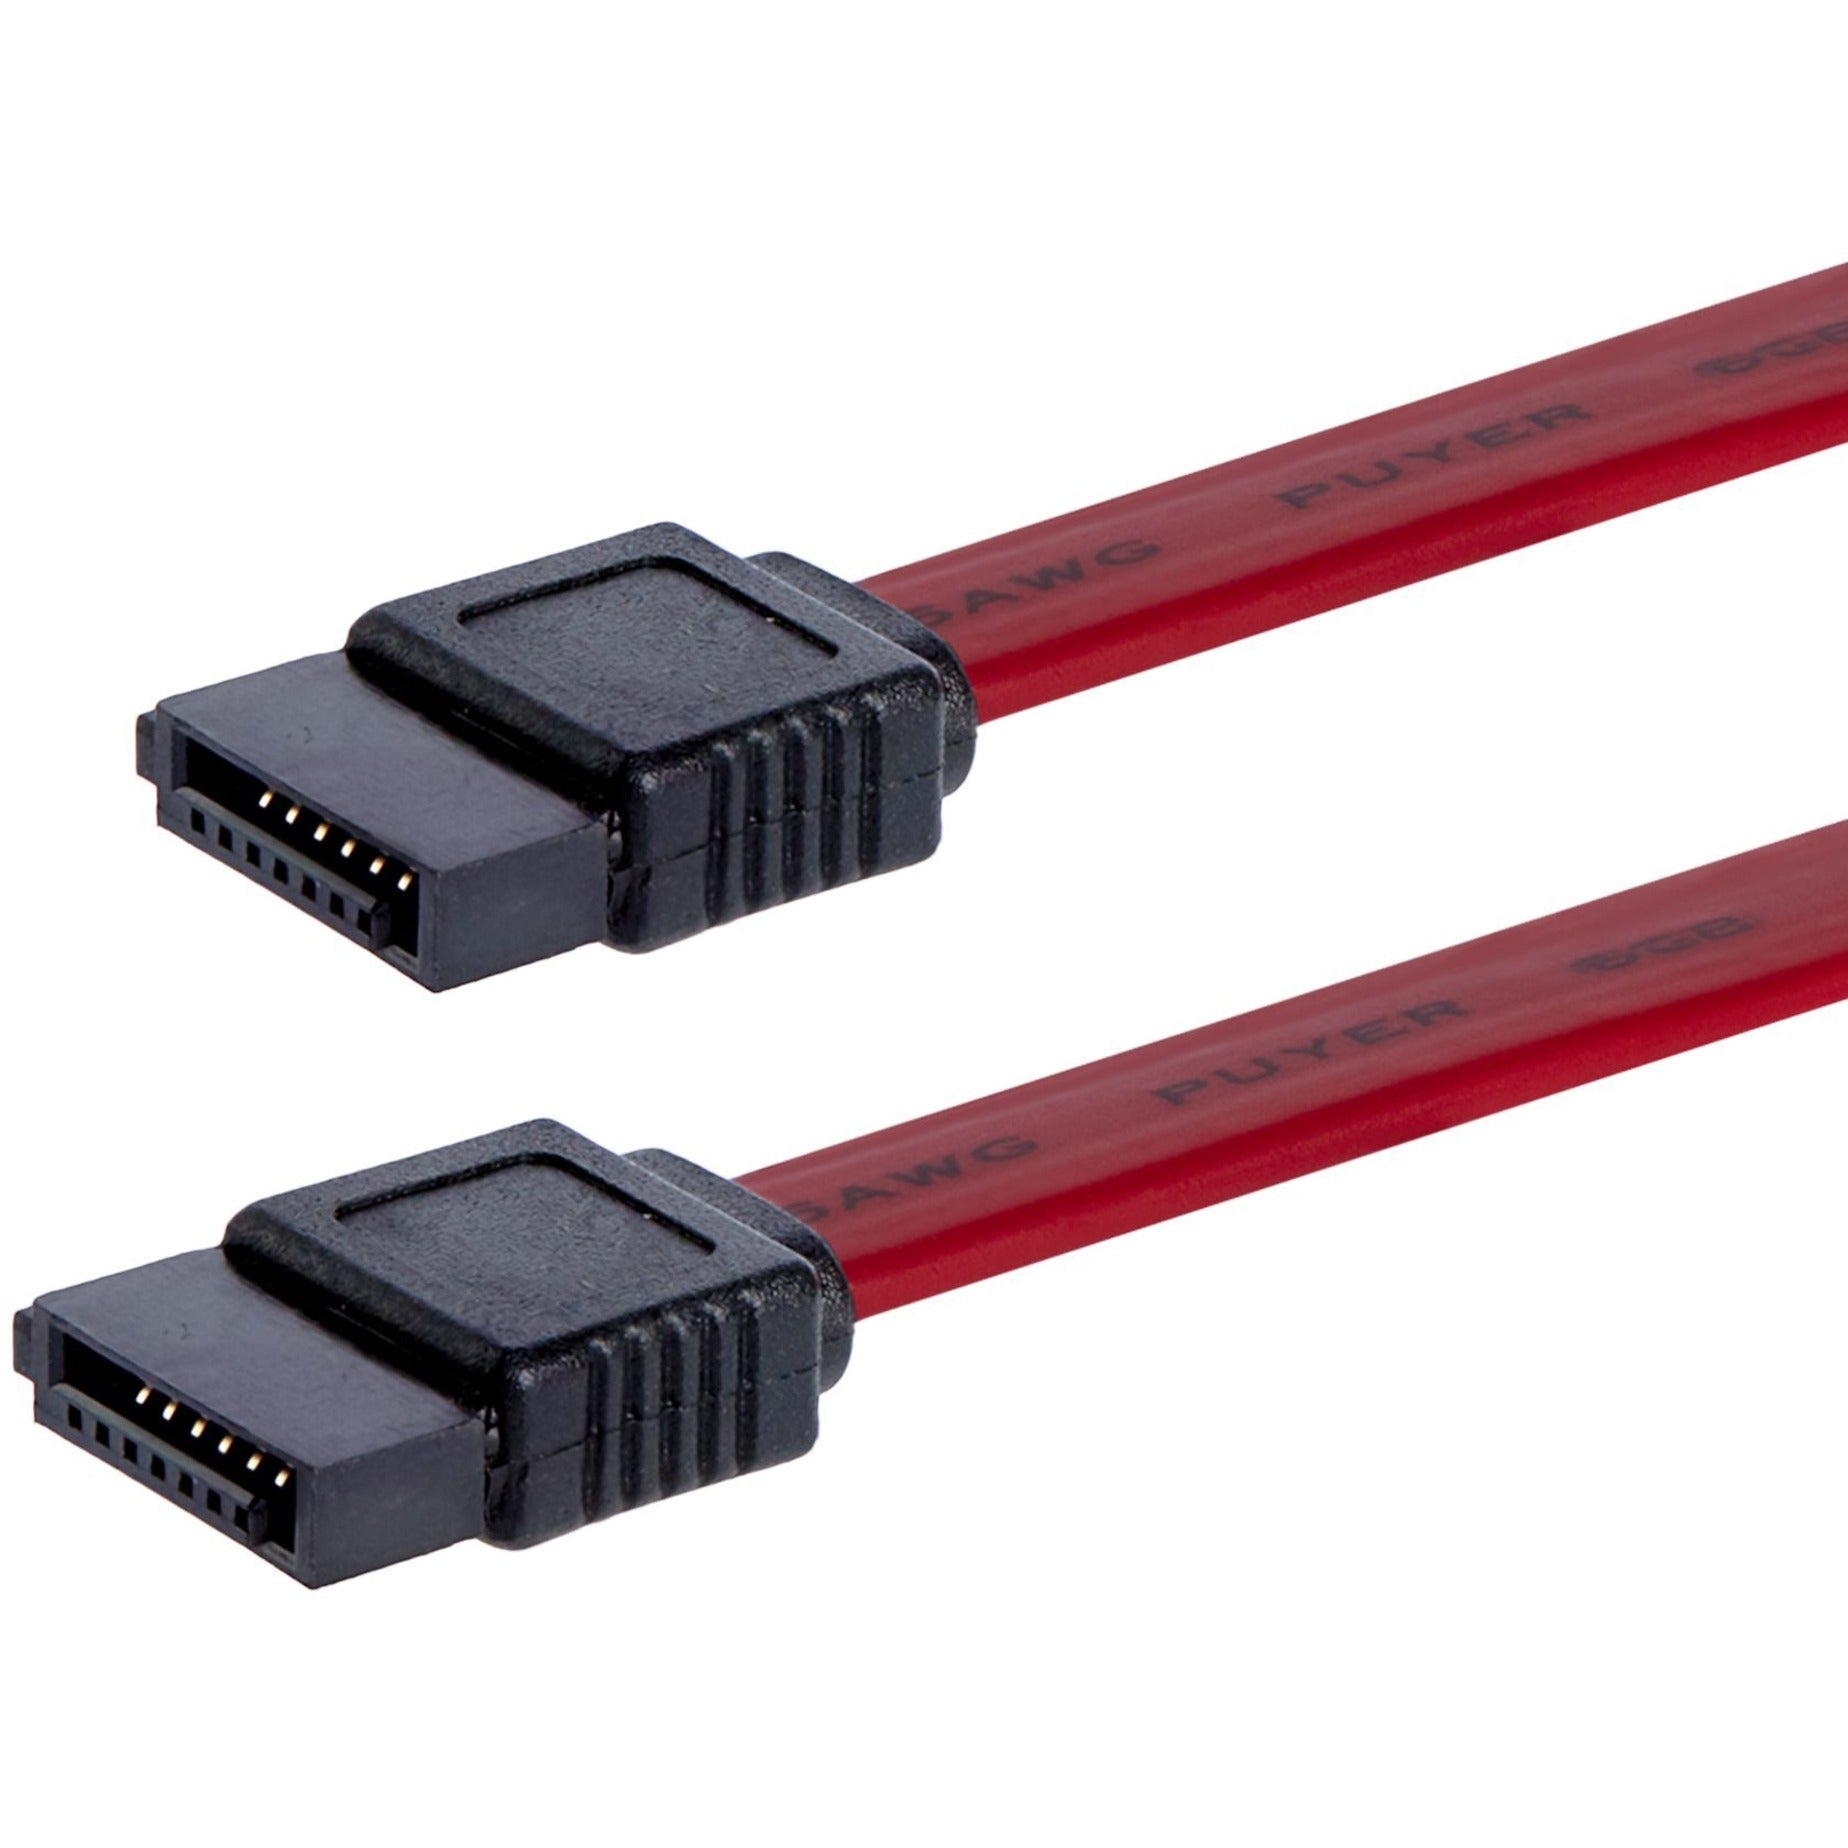 StarTech.com SATA12 12in SATA Serial ATA Cable, Flexible, 6 Gbit/s Data Transfer Rate, Red